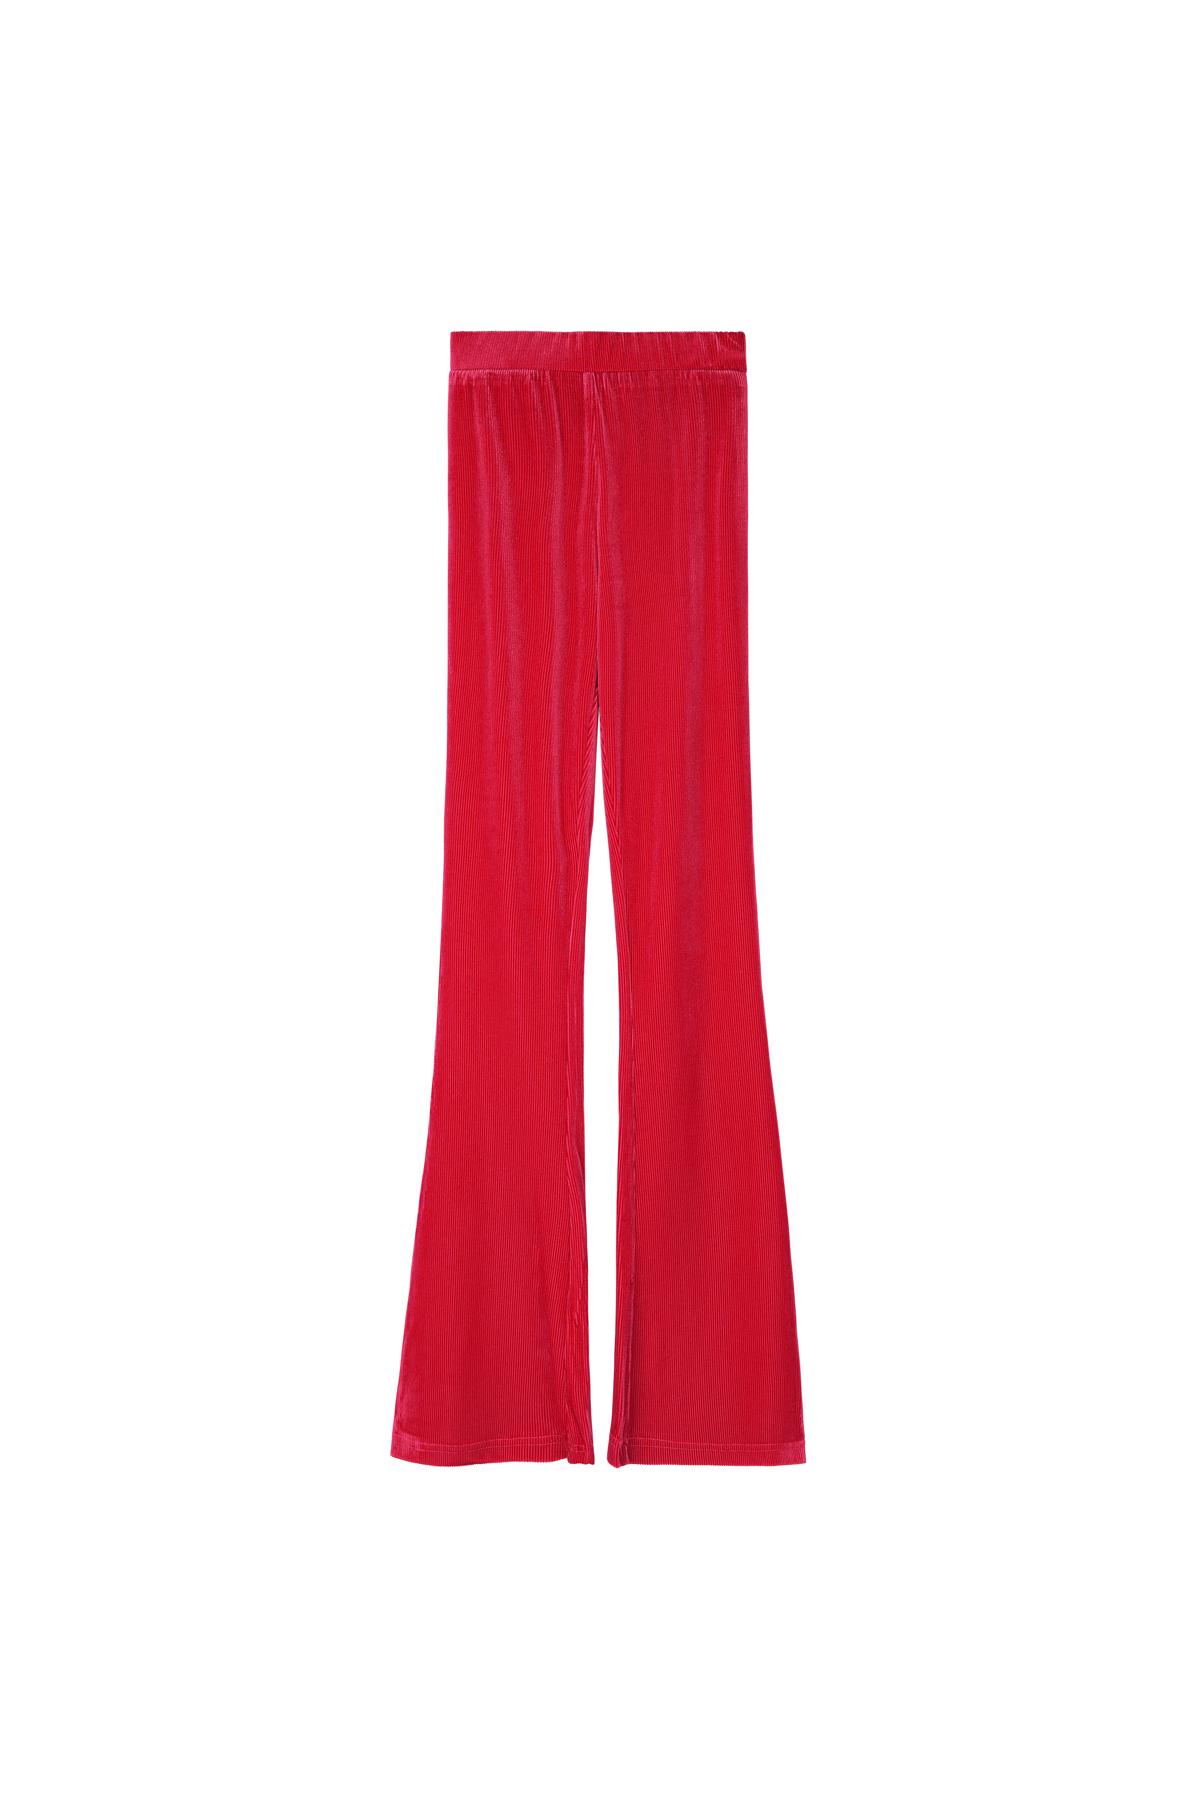 Rouge / S / Pantalon Century Rouge S 